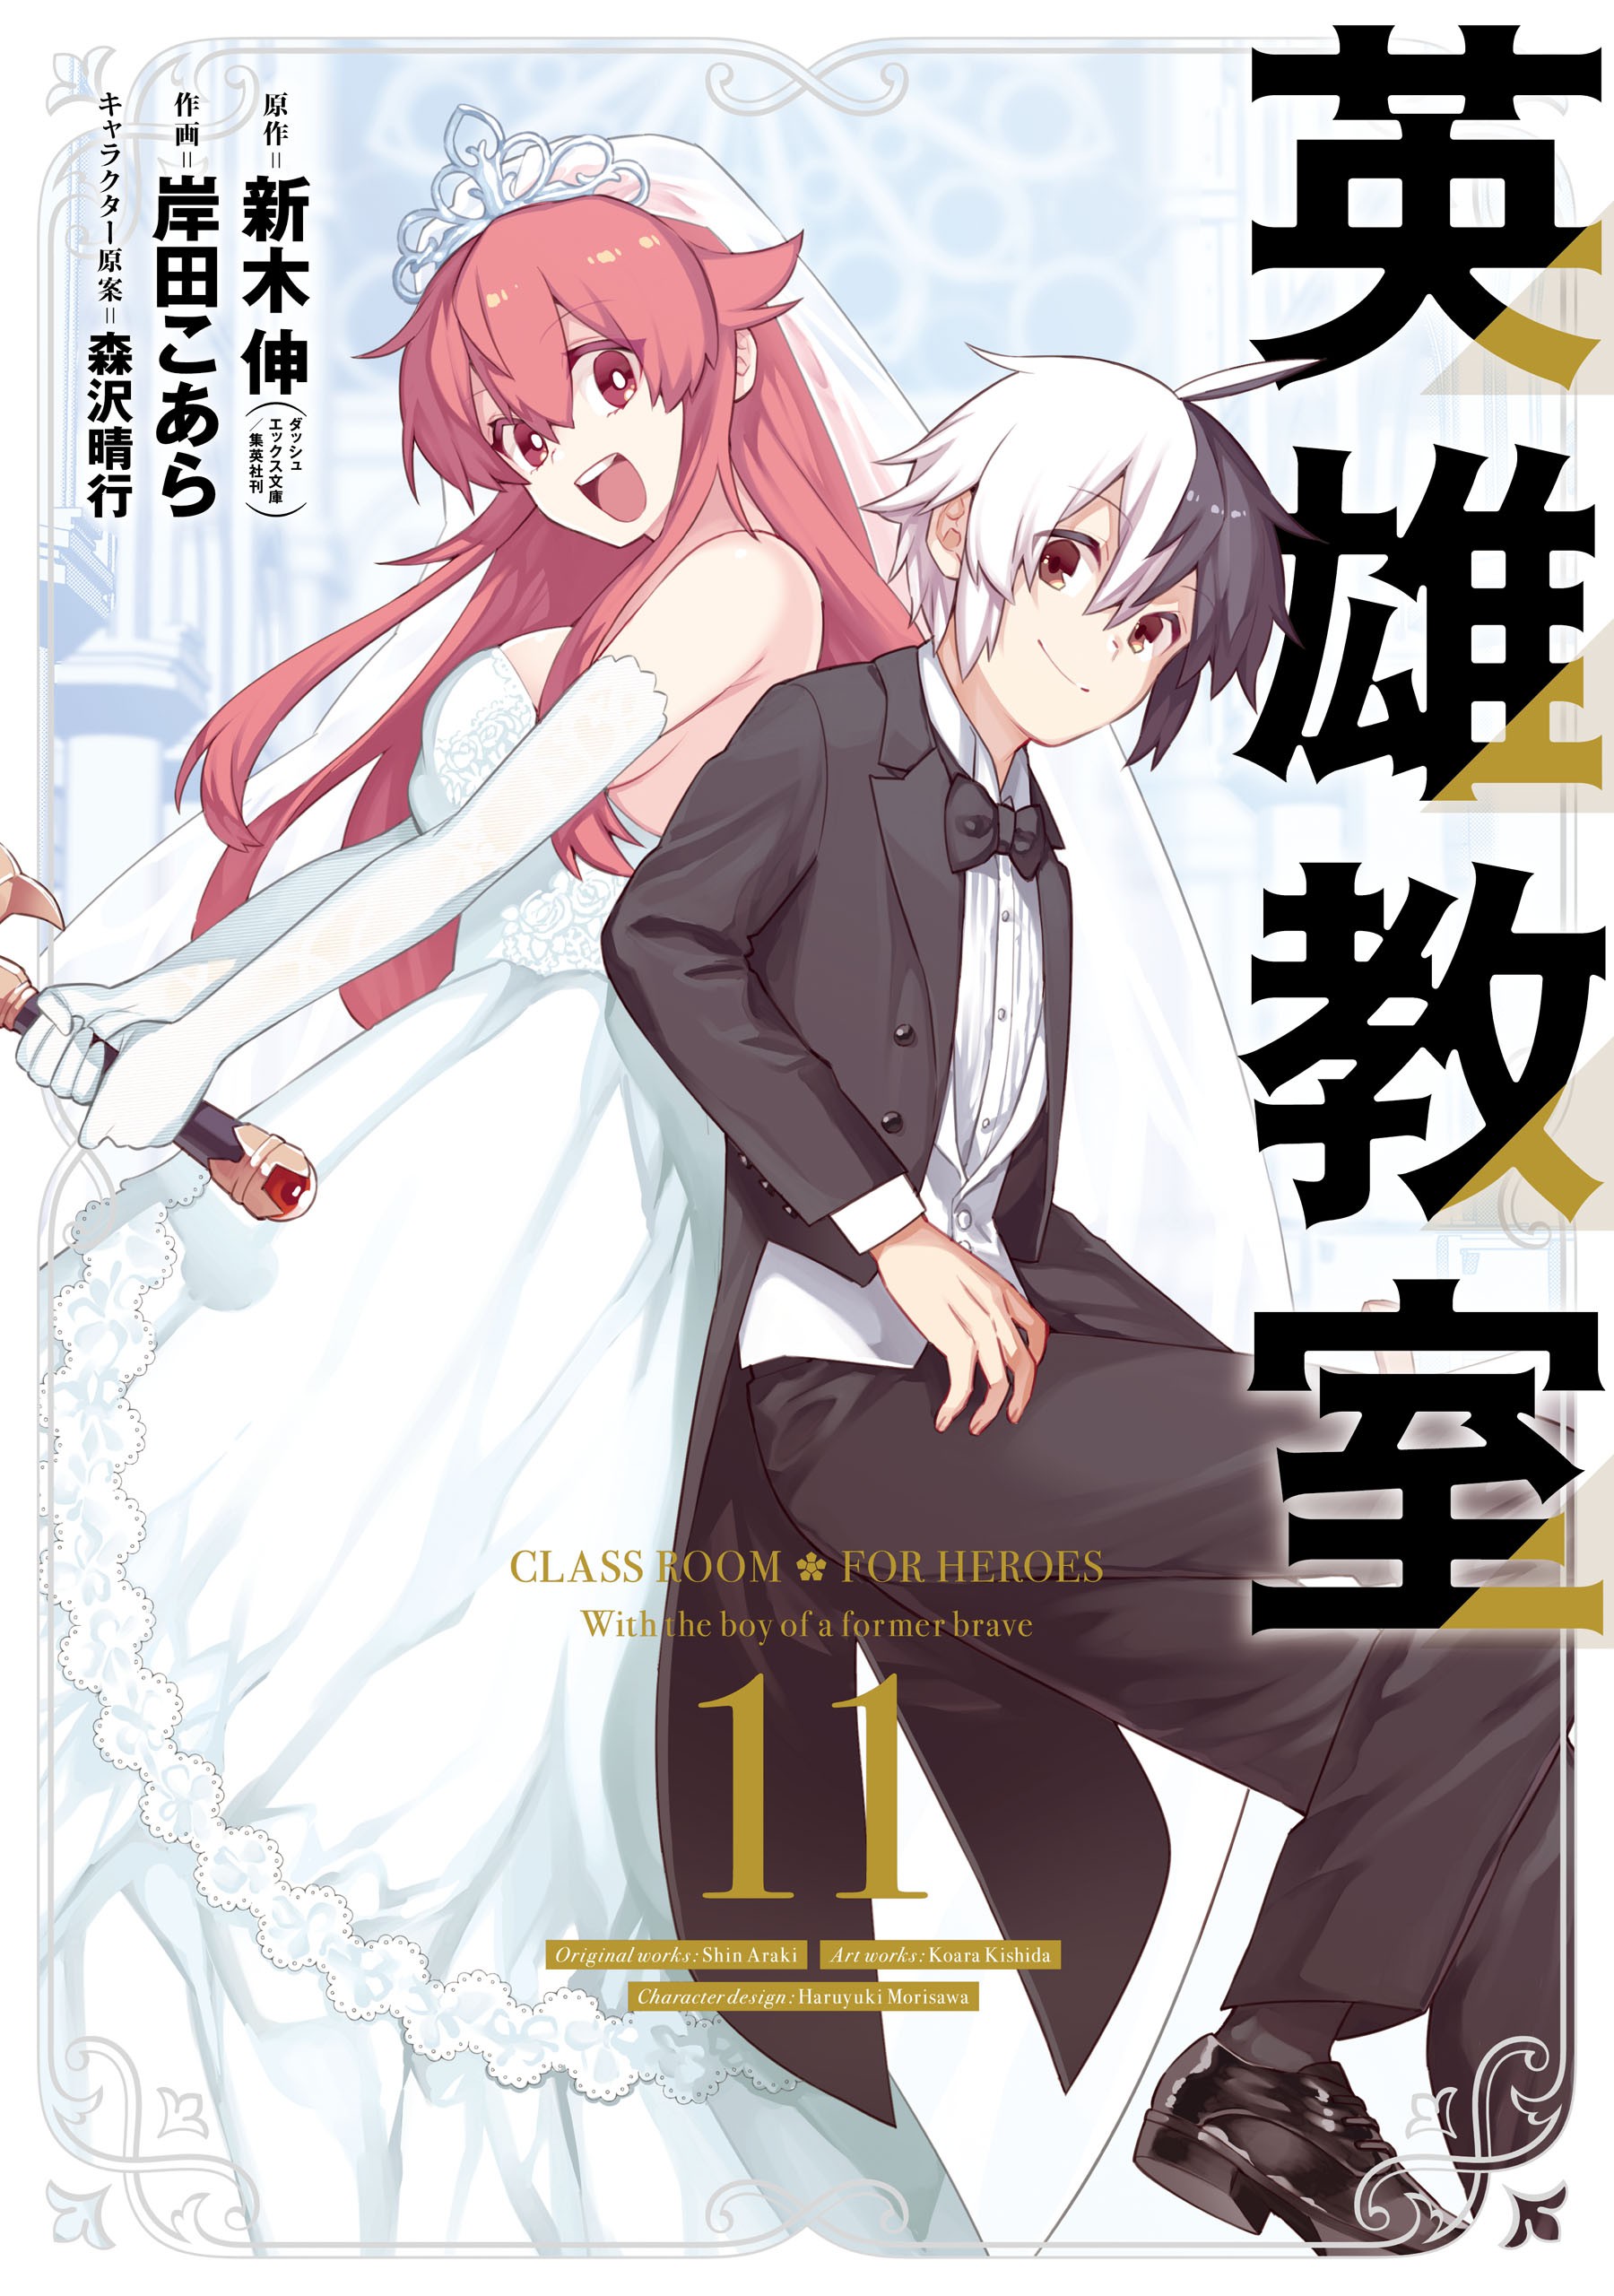 Anime Review: Eiyuu Kyoushitsu (Classroom for Heroes) 2023 Latest #ani